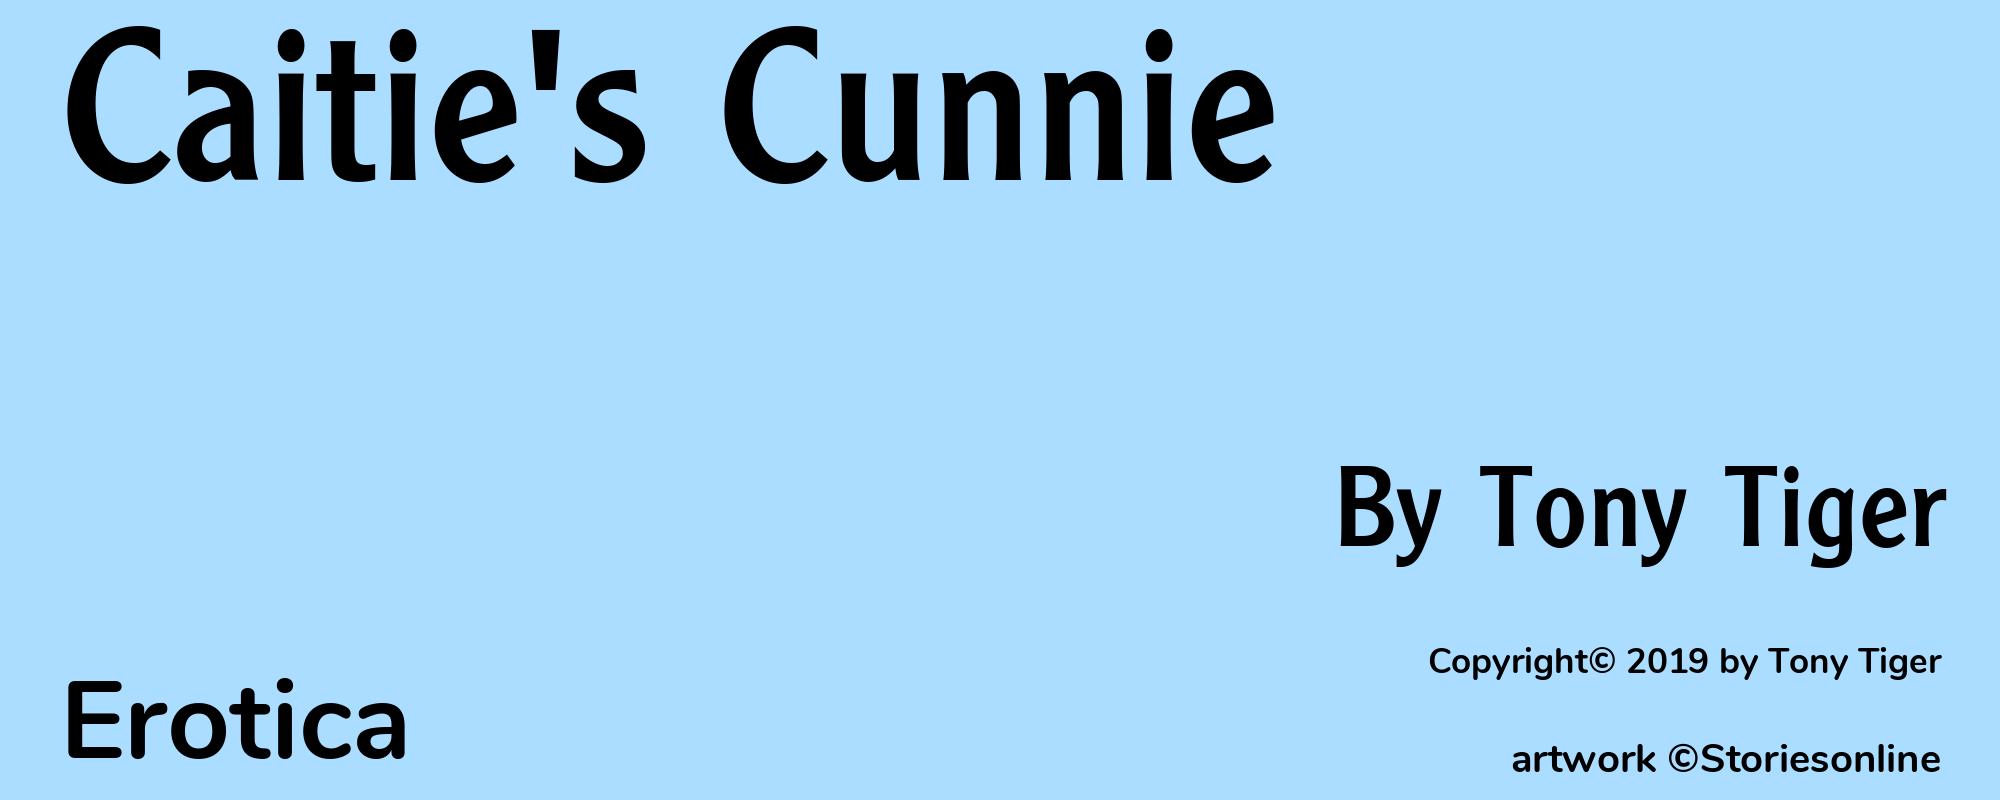 Caitie's Cunnie - Cover